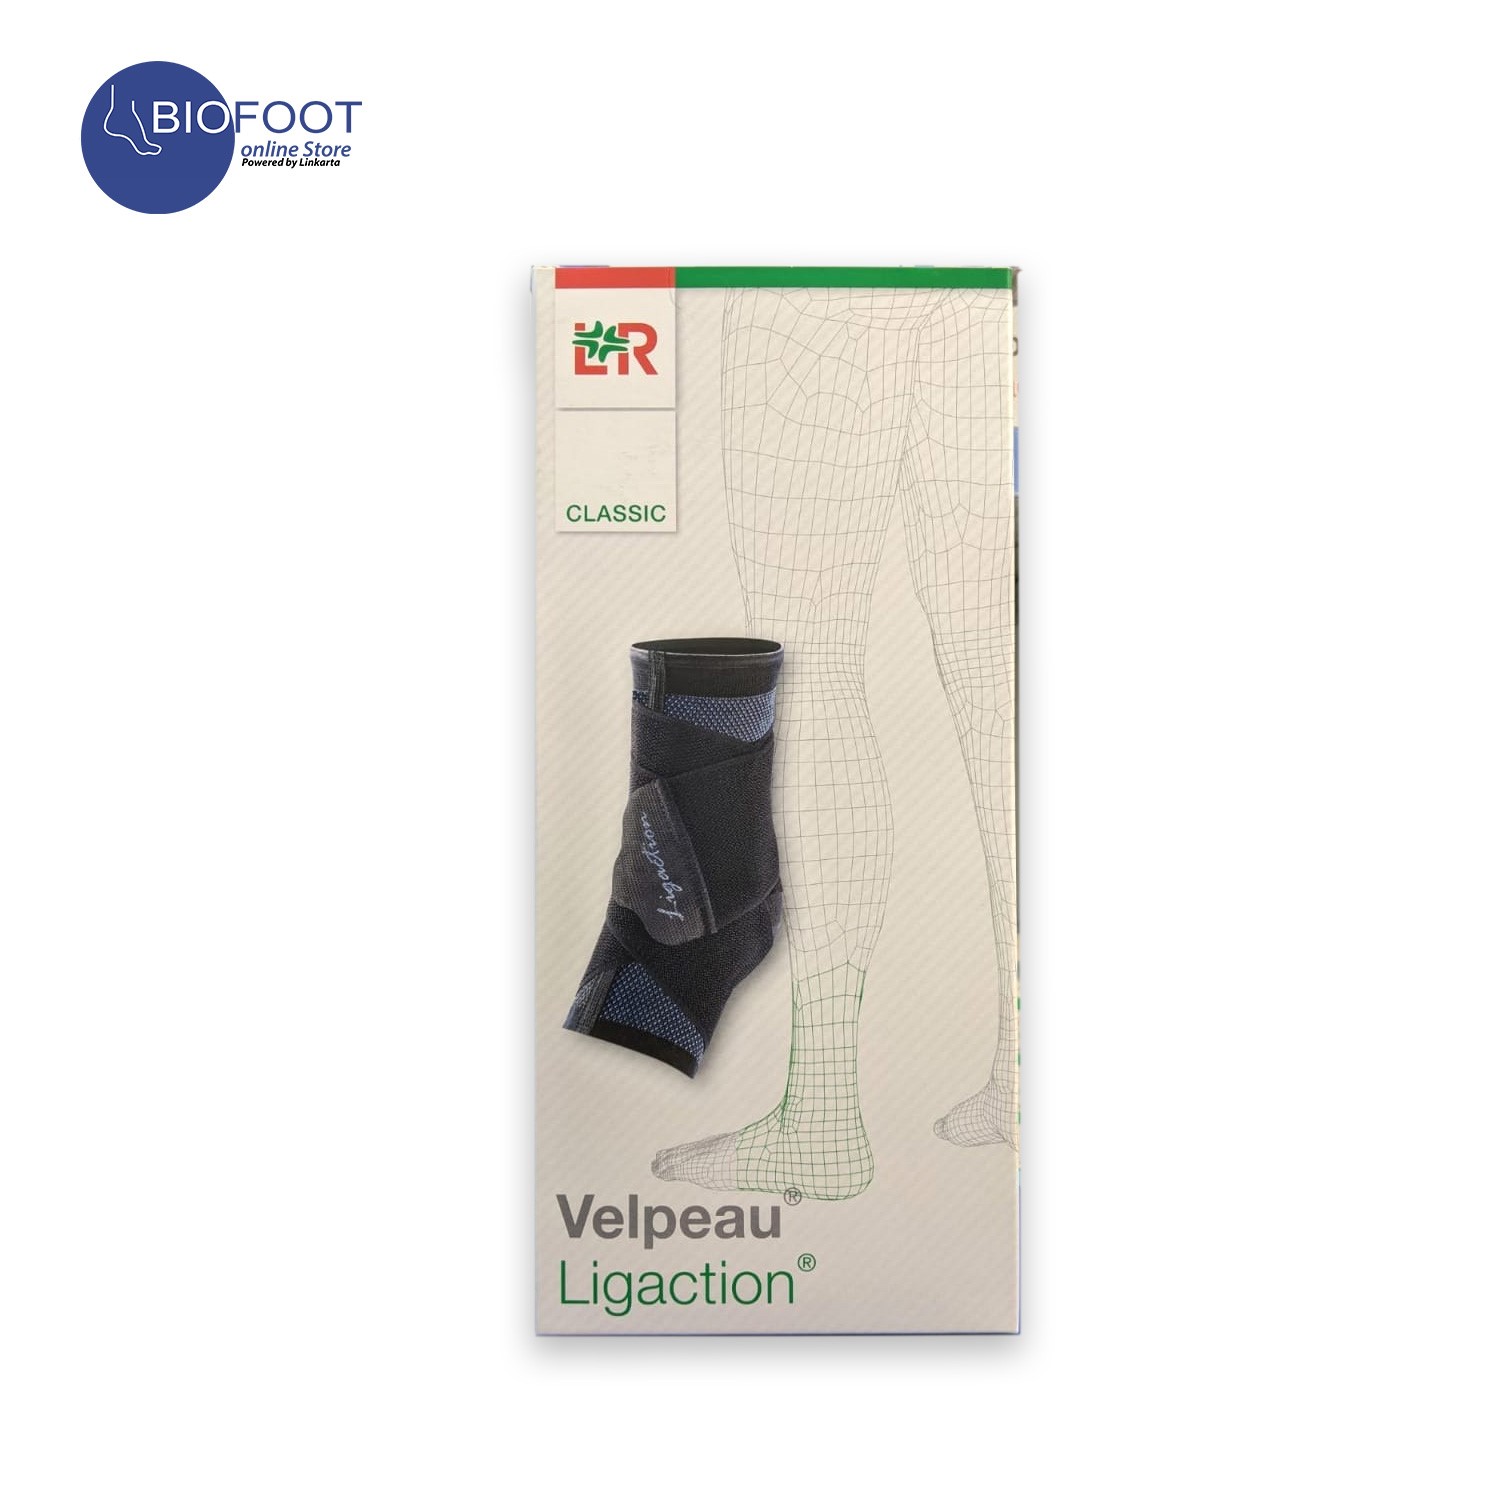 Velpeau Ligaction Ankle Support Brace elastic Blue Online Shopping